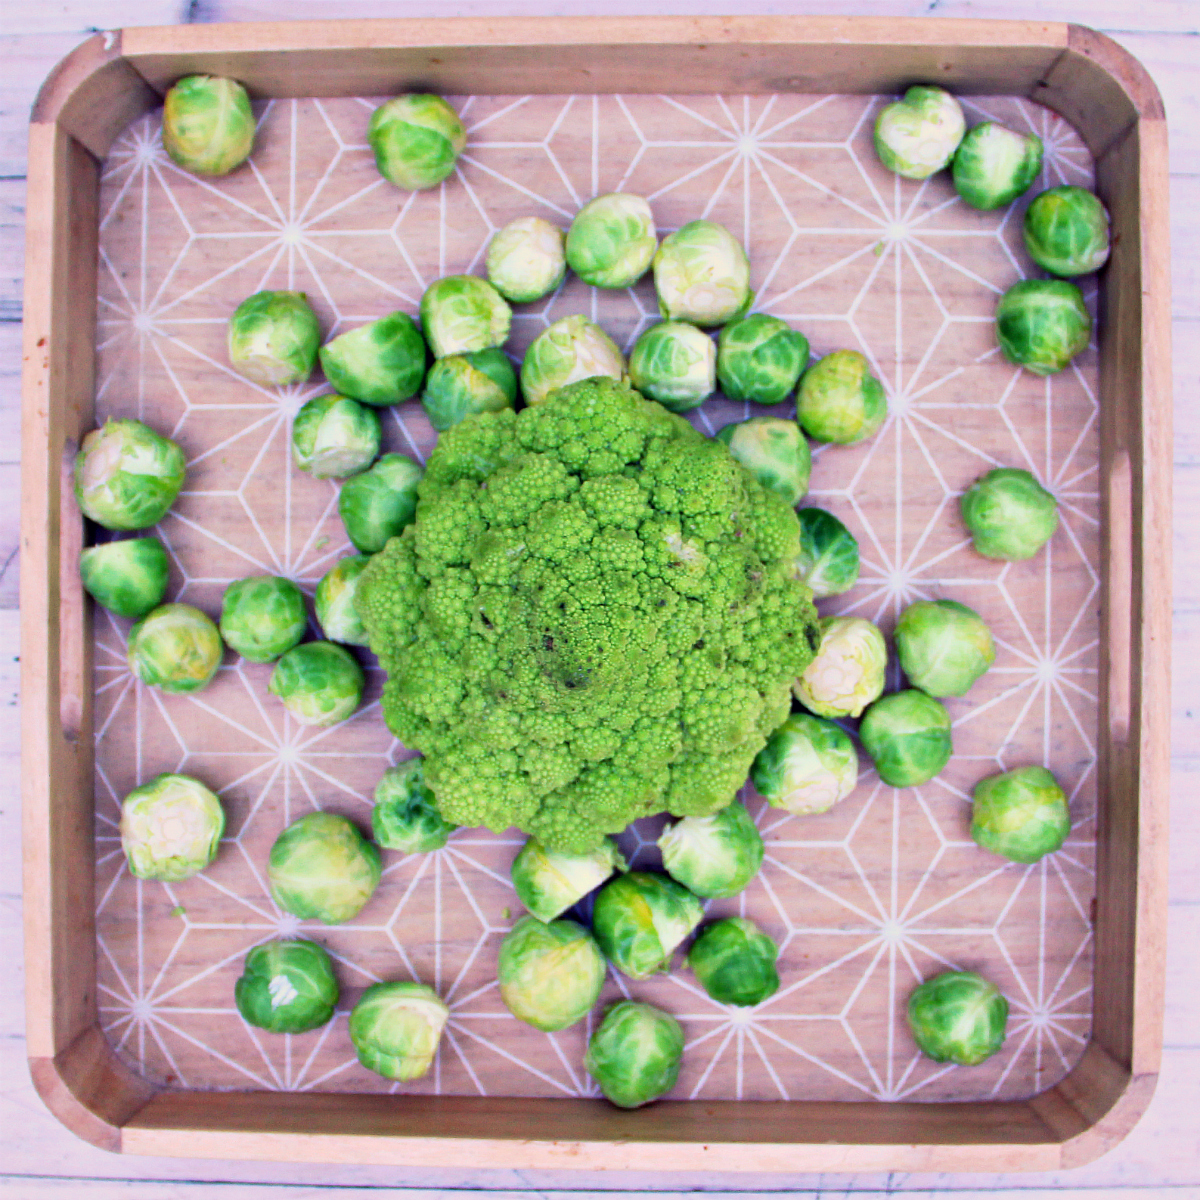 Roasted Glazed Romanesco & Brussels Sprouts - The Vegan Eskimo